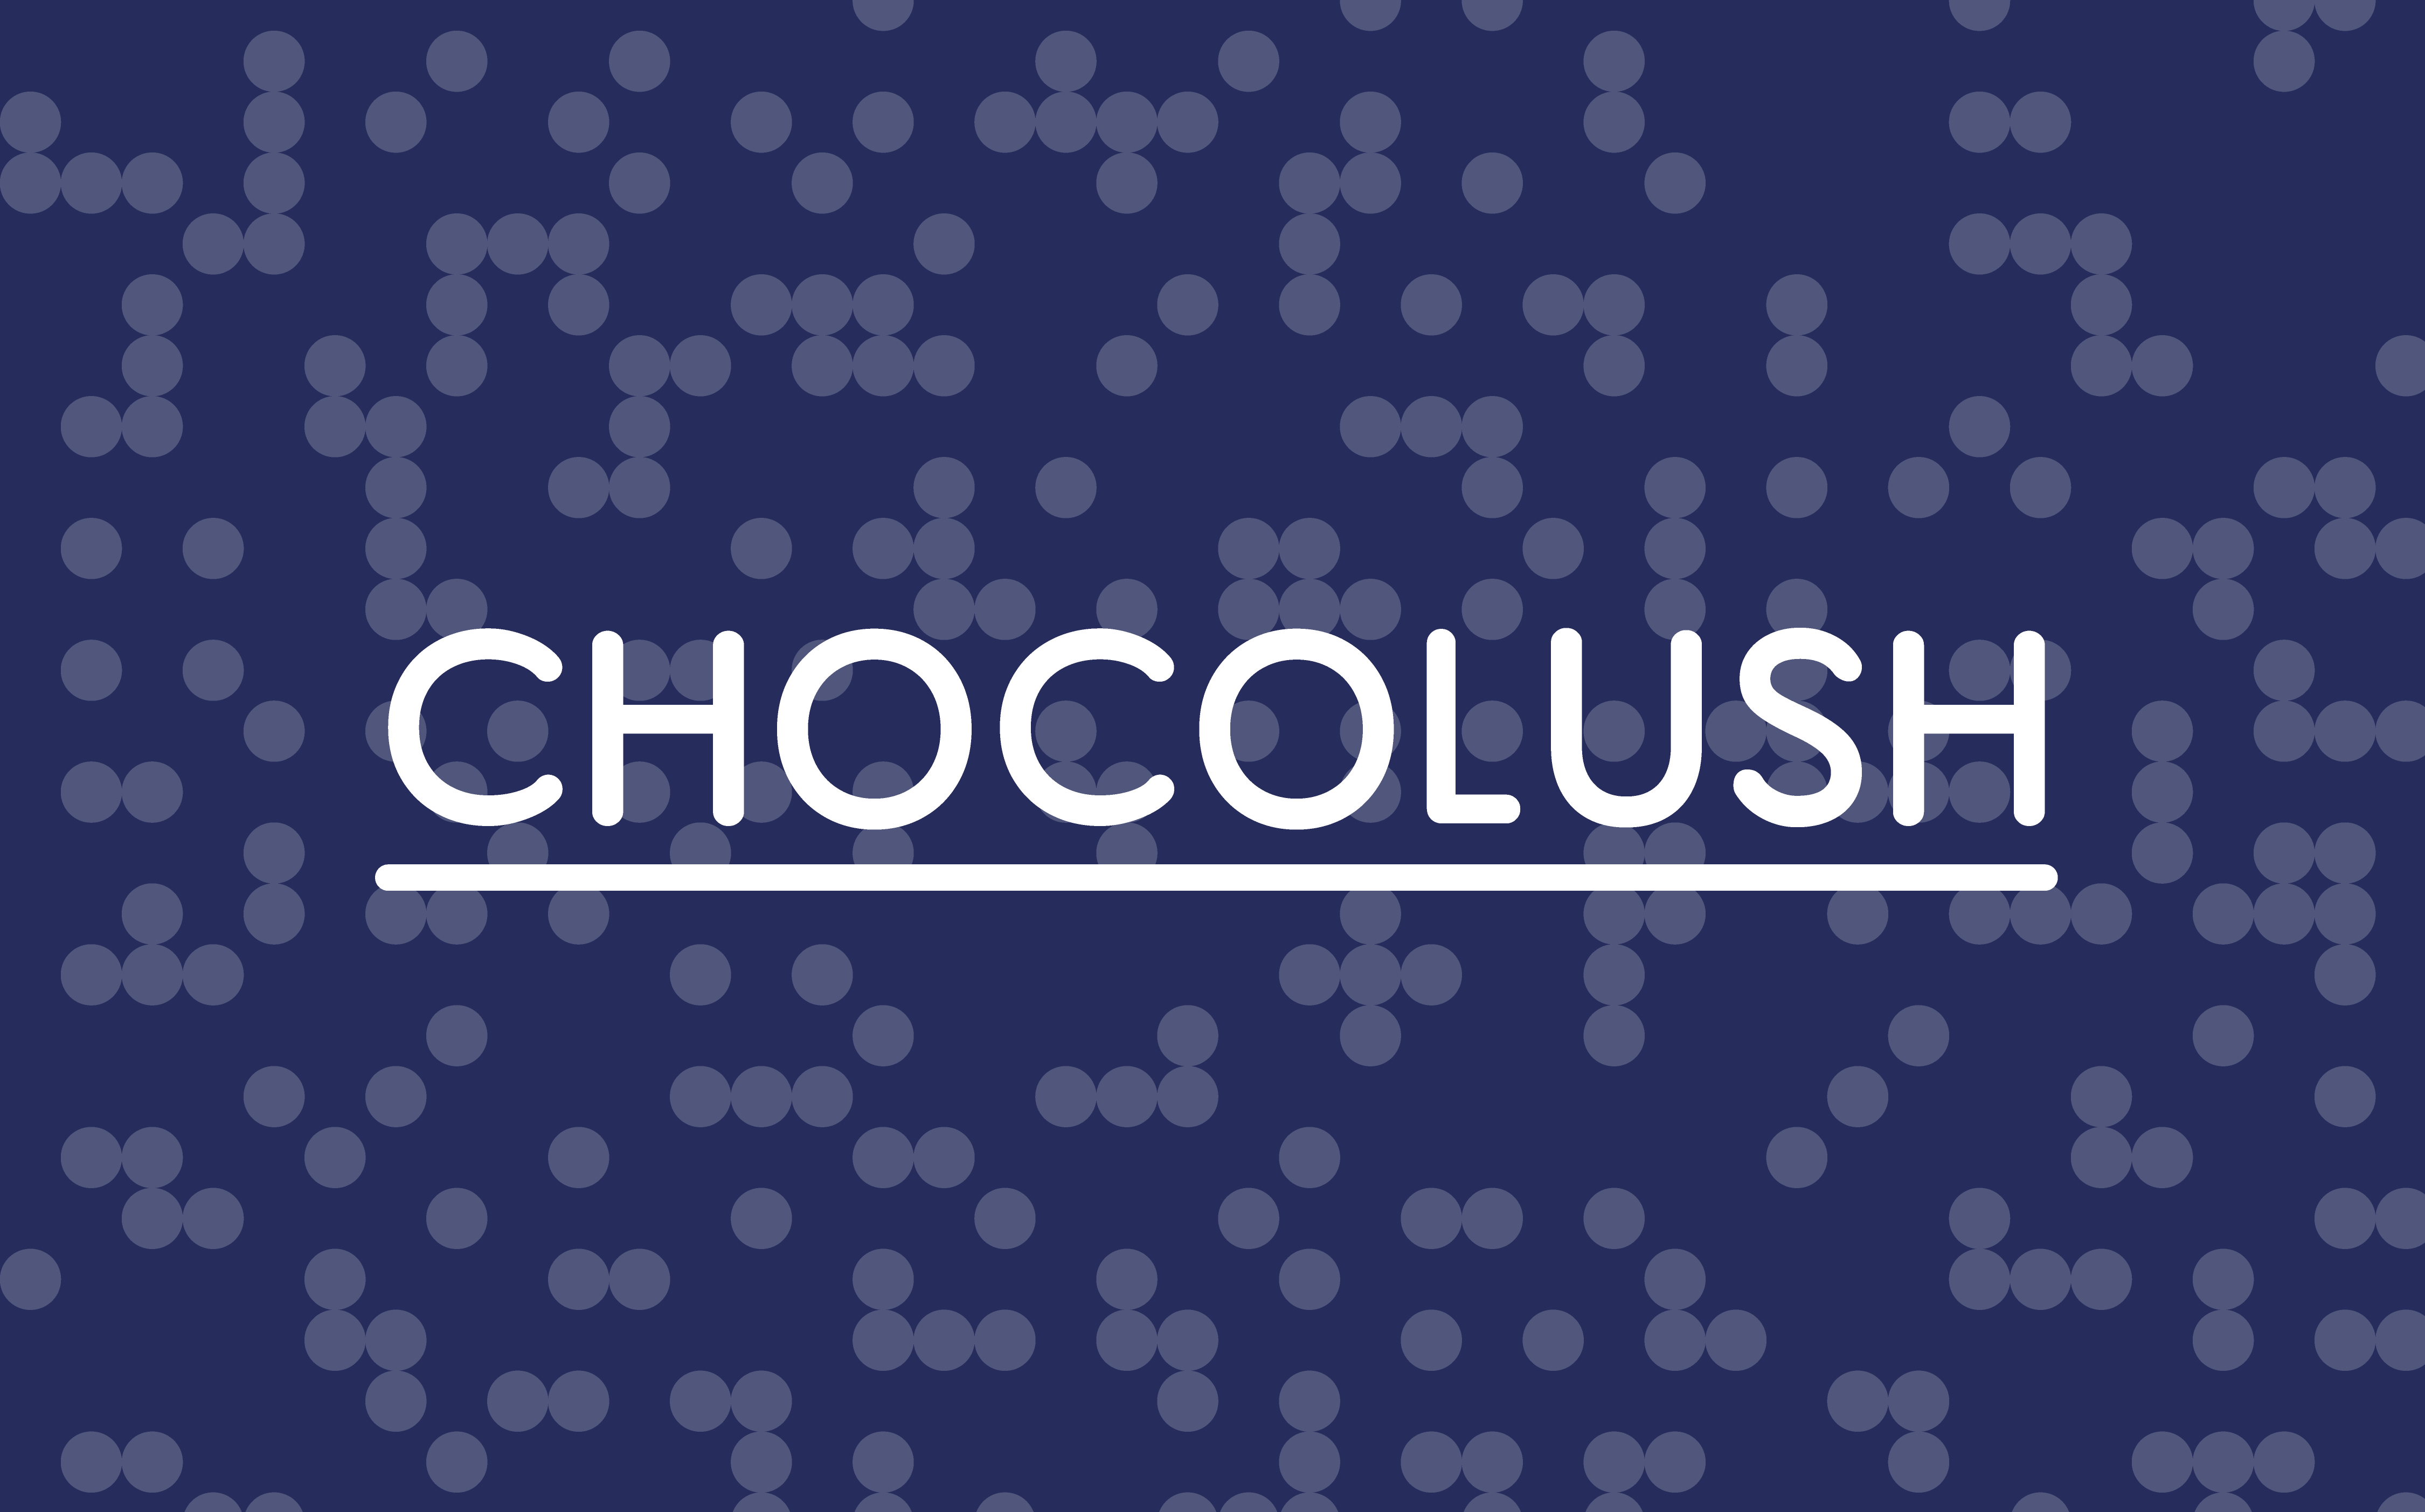 Chocolush. Extraordinary chocolate by Irene Cantero Moreno - Creative Work